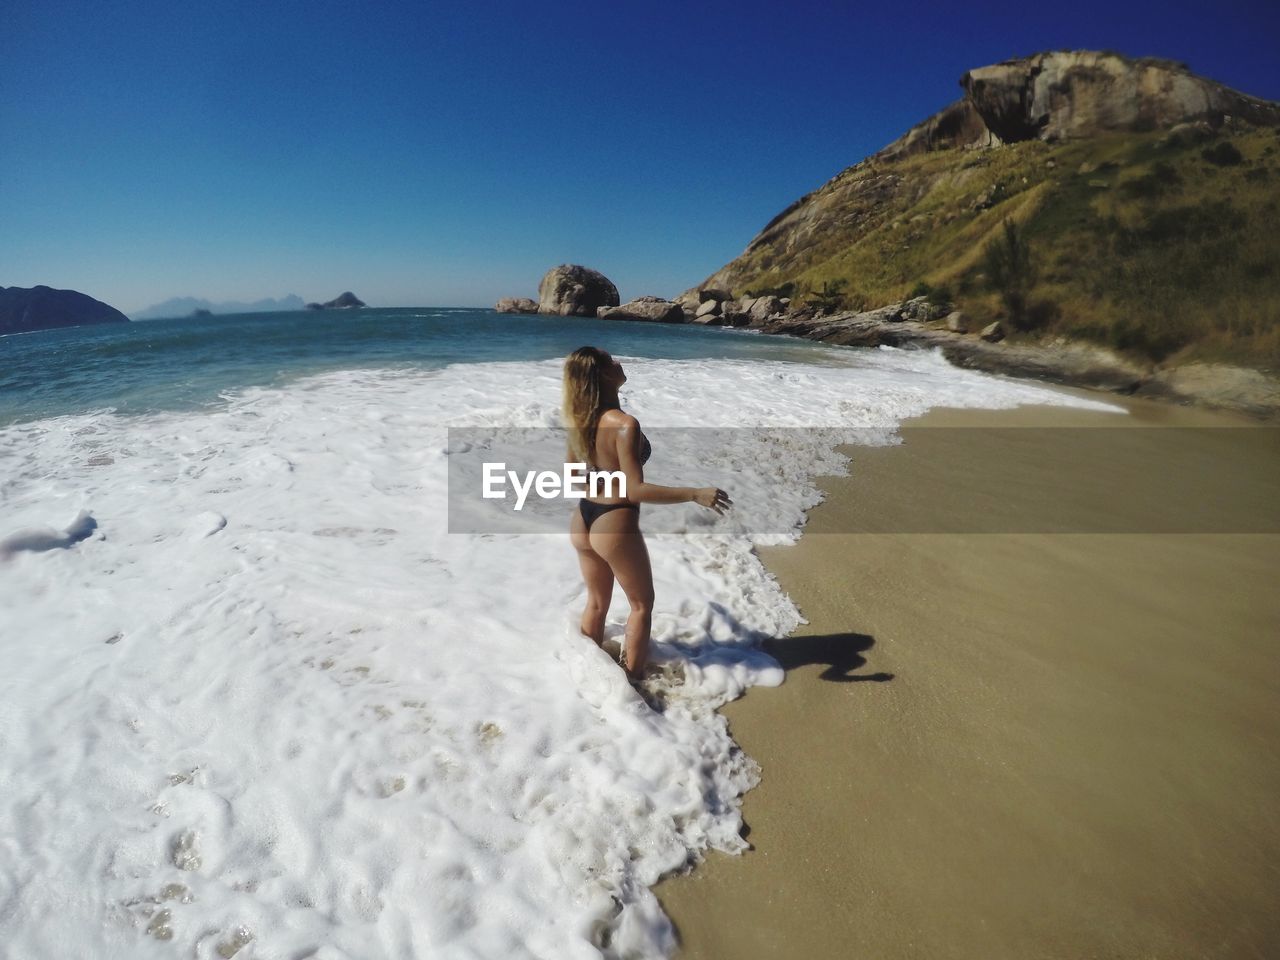 Seductive woman wearing bikini while standing on shore at beach